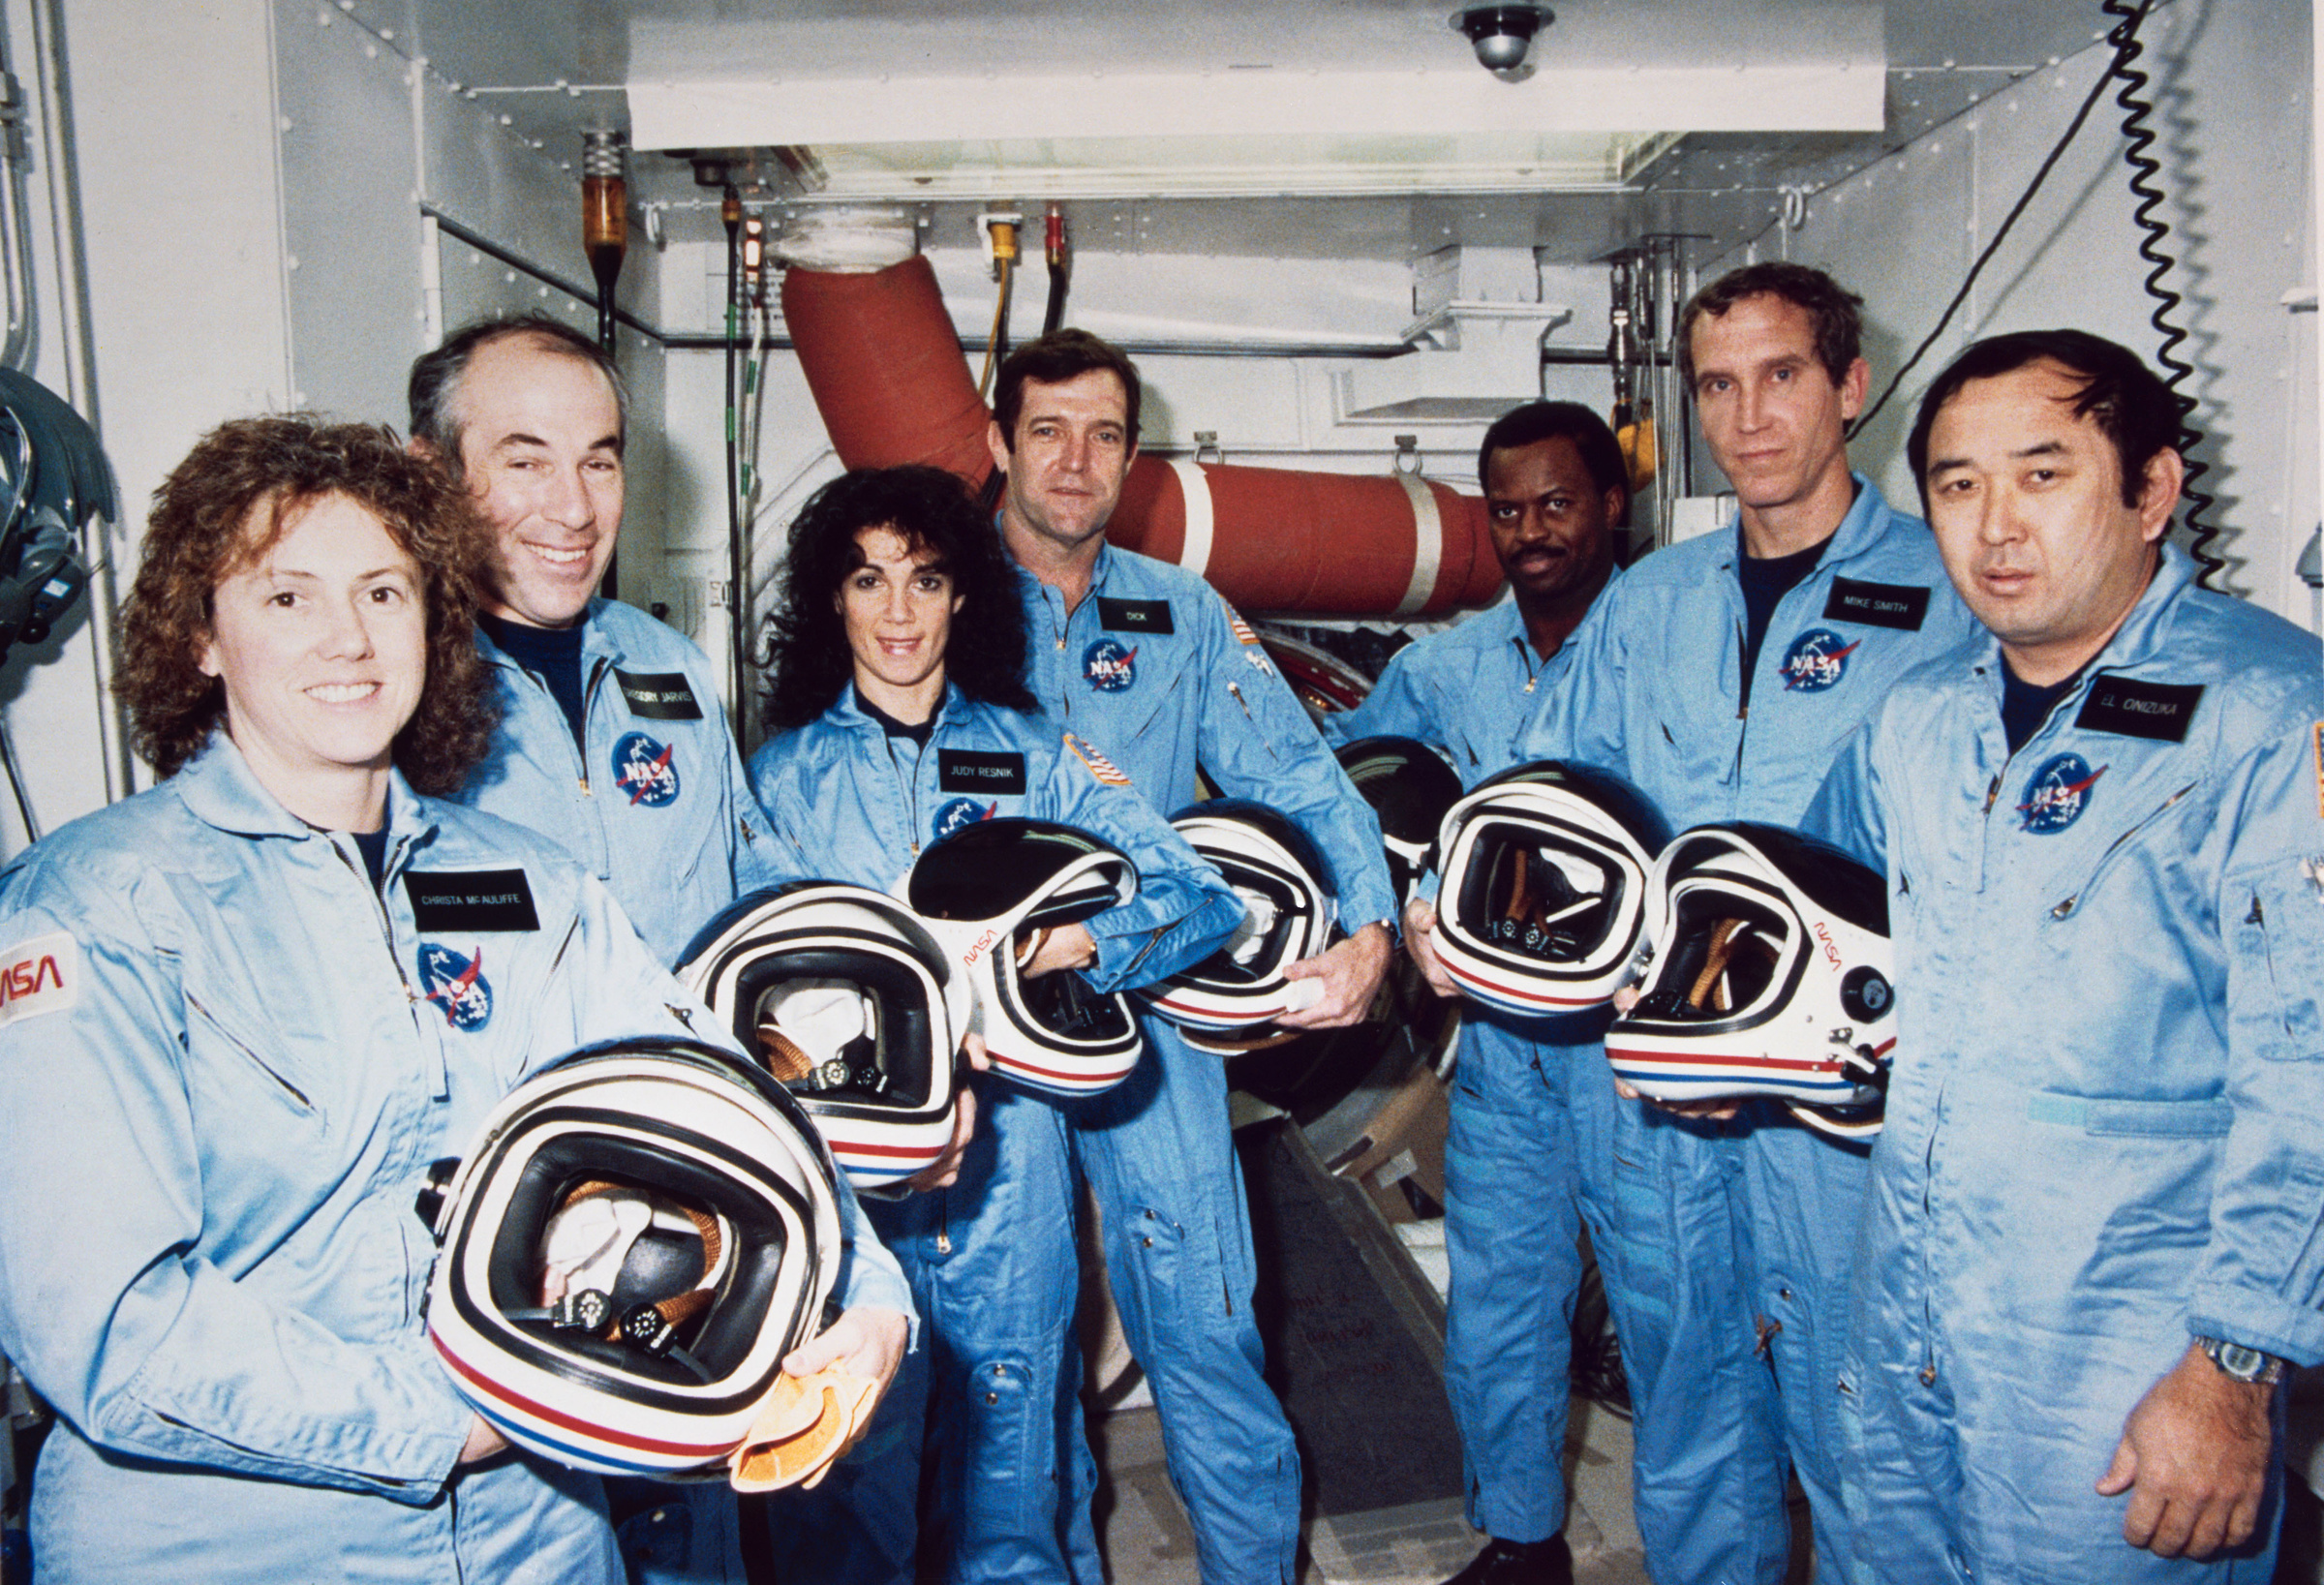 Погибший экипаж шаттла "Челленджер". Слева направо: Маколифф, Джарвис, Резник, Скоби, Макнейр, Смит, Онидзука. Фото © NASA / Public Domain